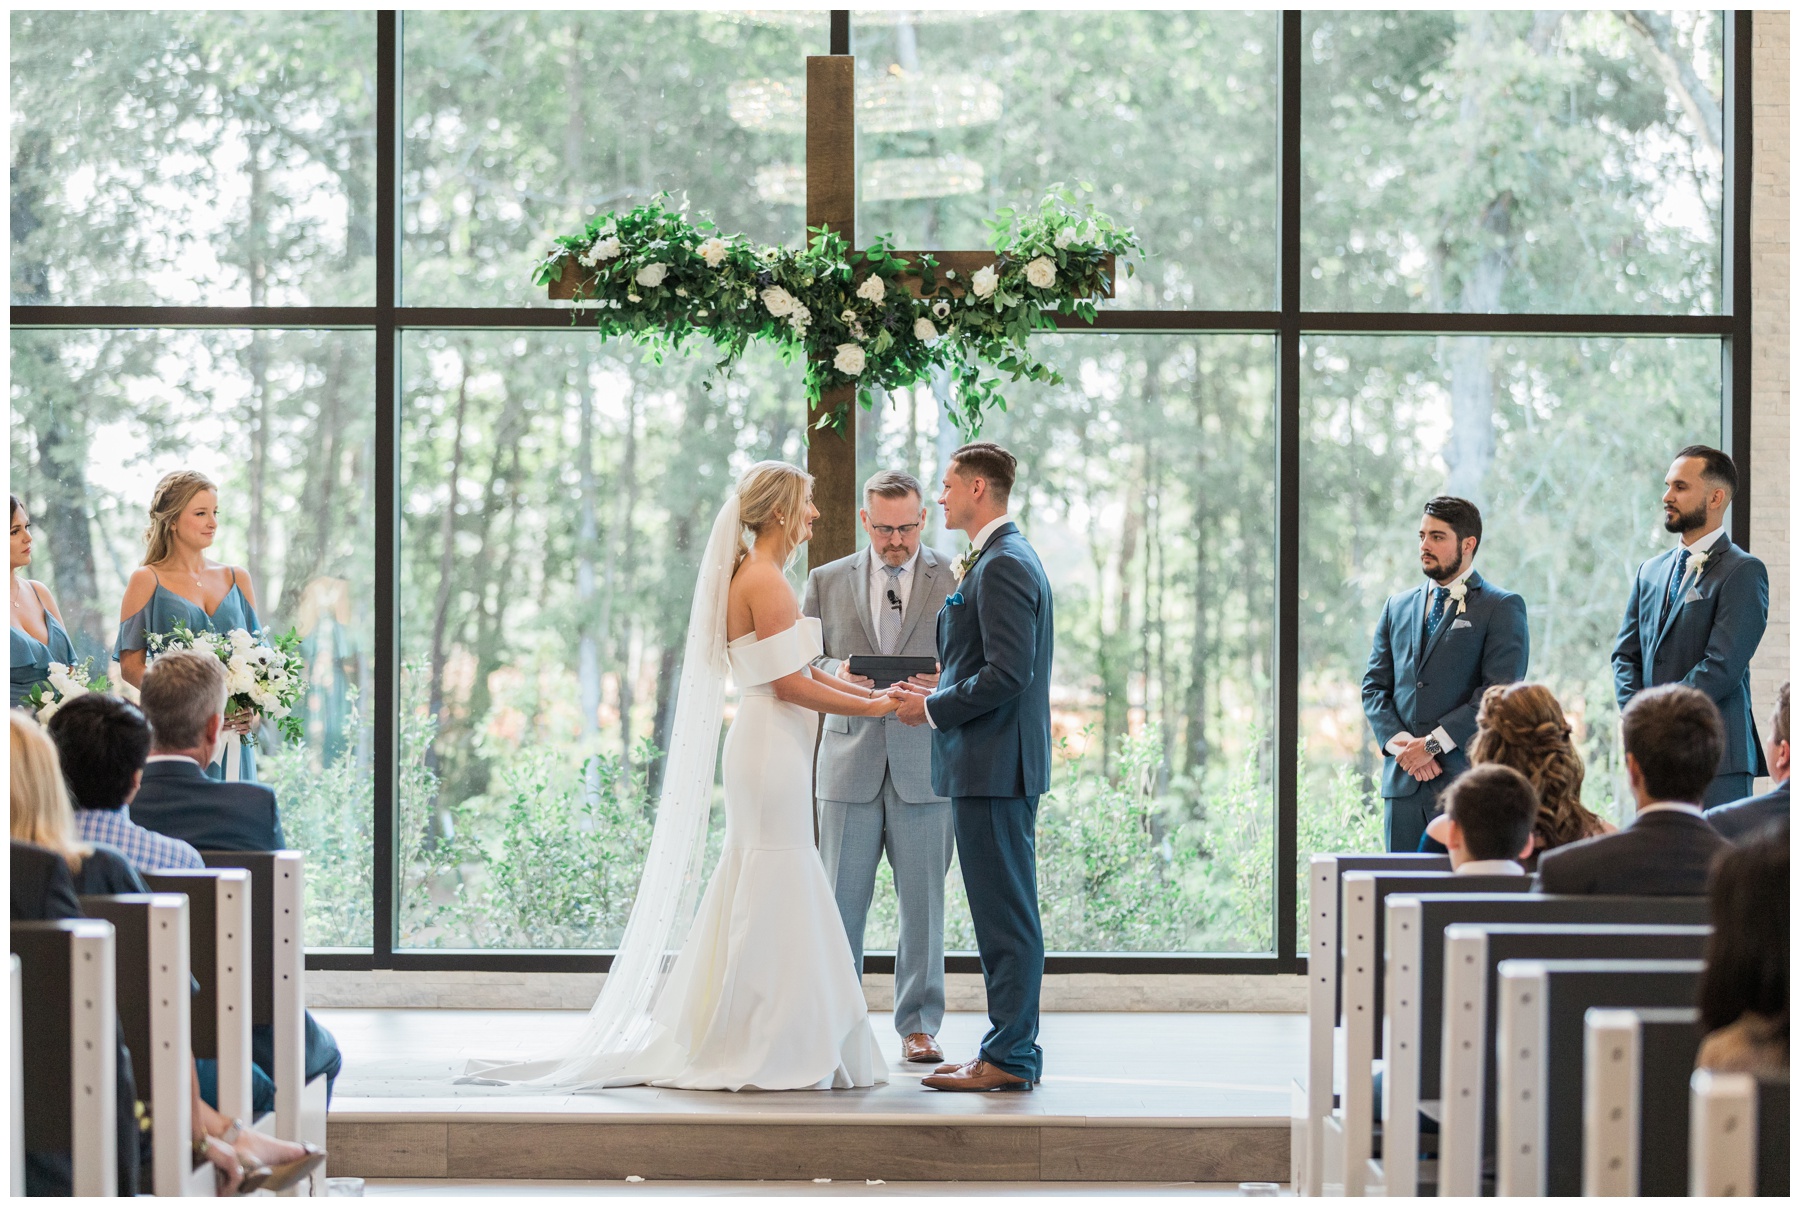 Wedding ceremony at The Luminaire in Houston, Texas